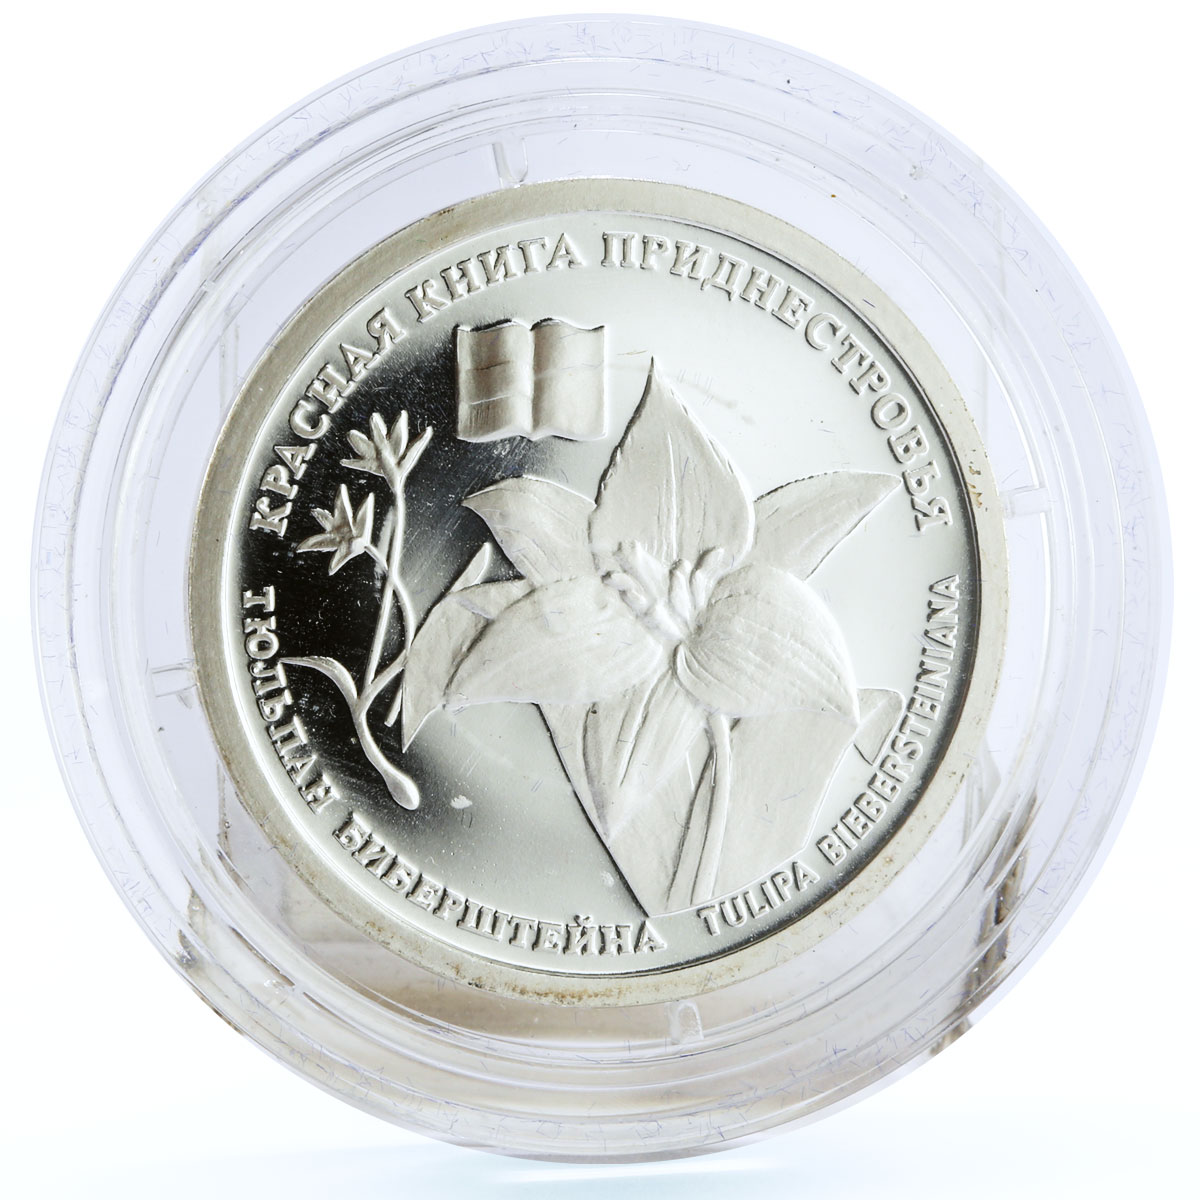 Transnistria 10 rubles Local Red Book Bieberstein Tulip Flower silver coin 2008